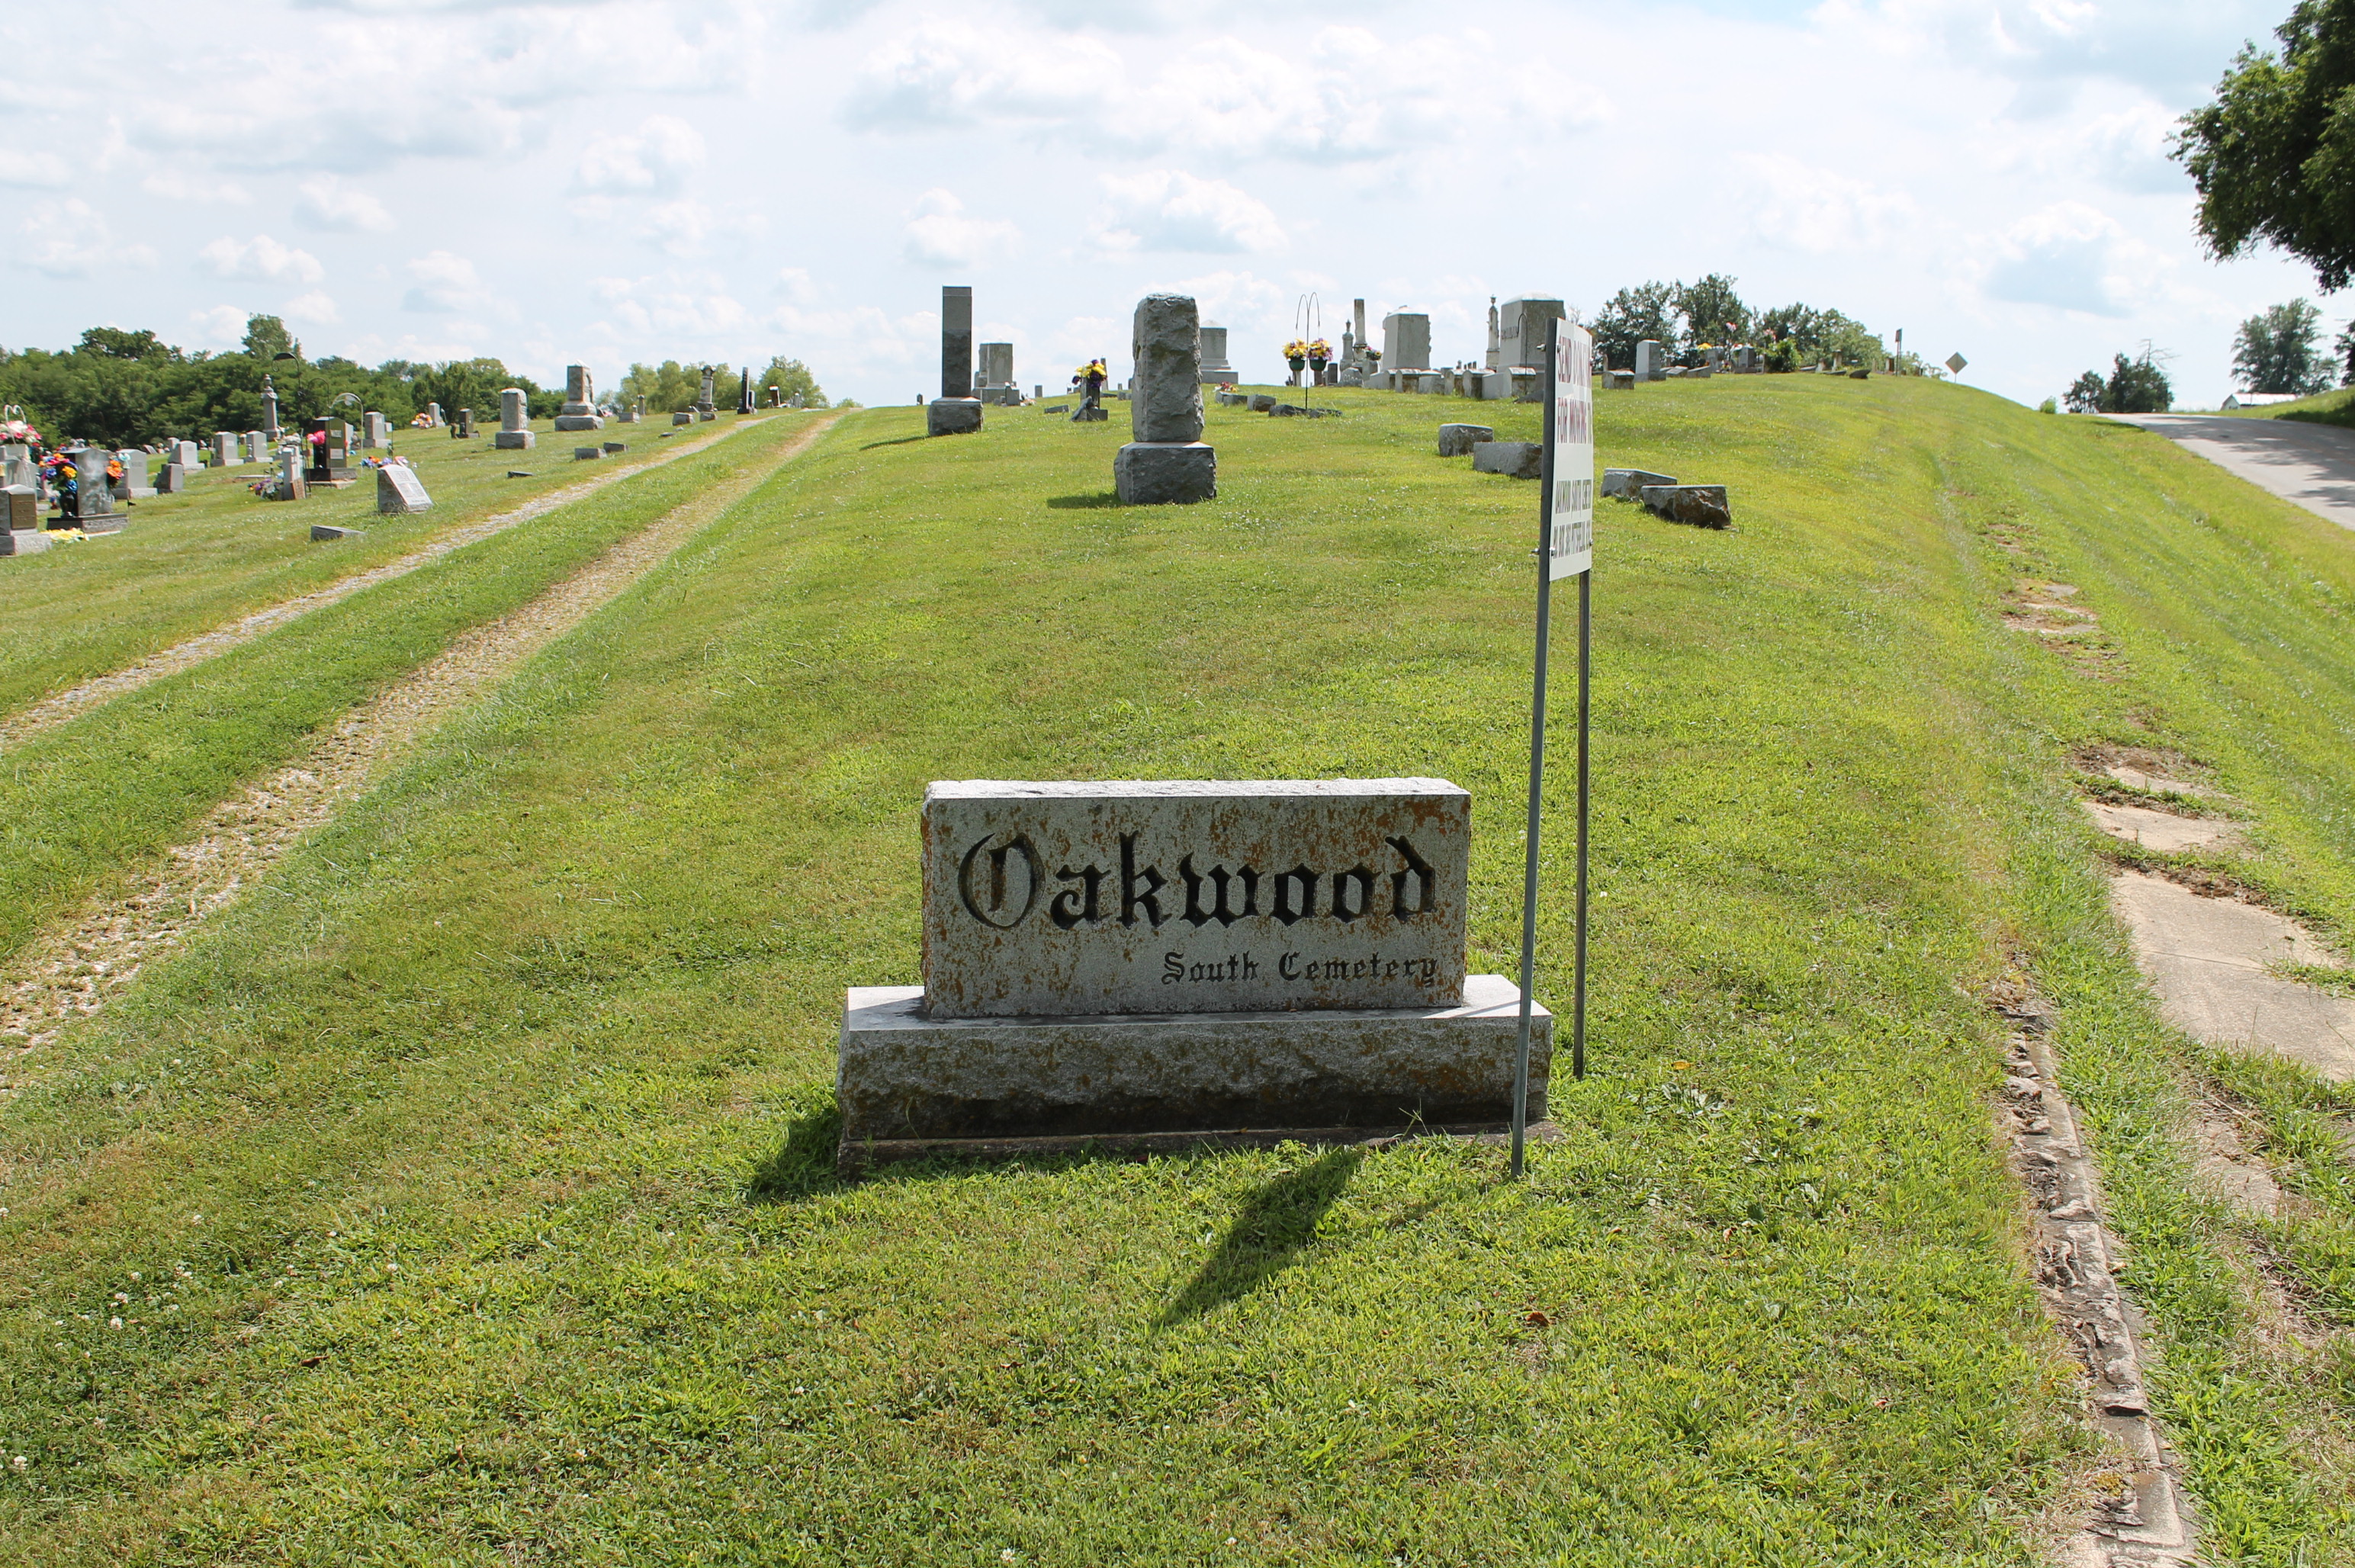 Oakwood South Cemetery - Pittsfield, Illinois